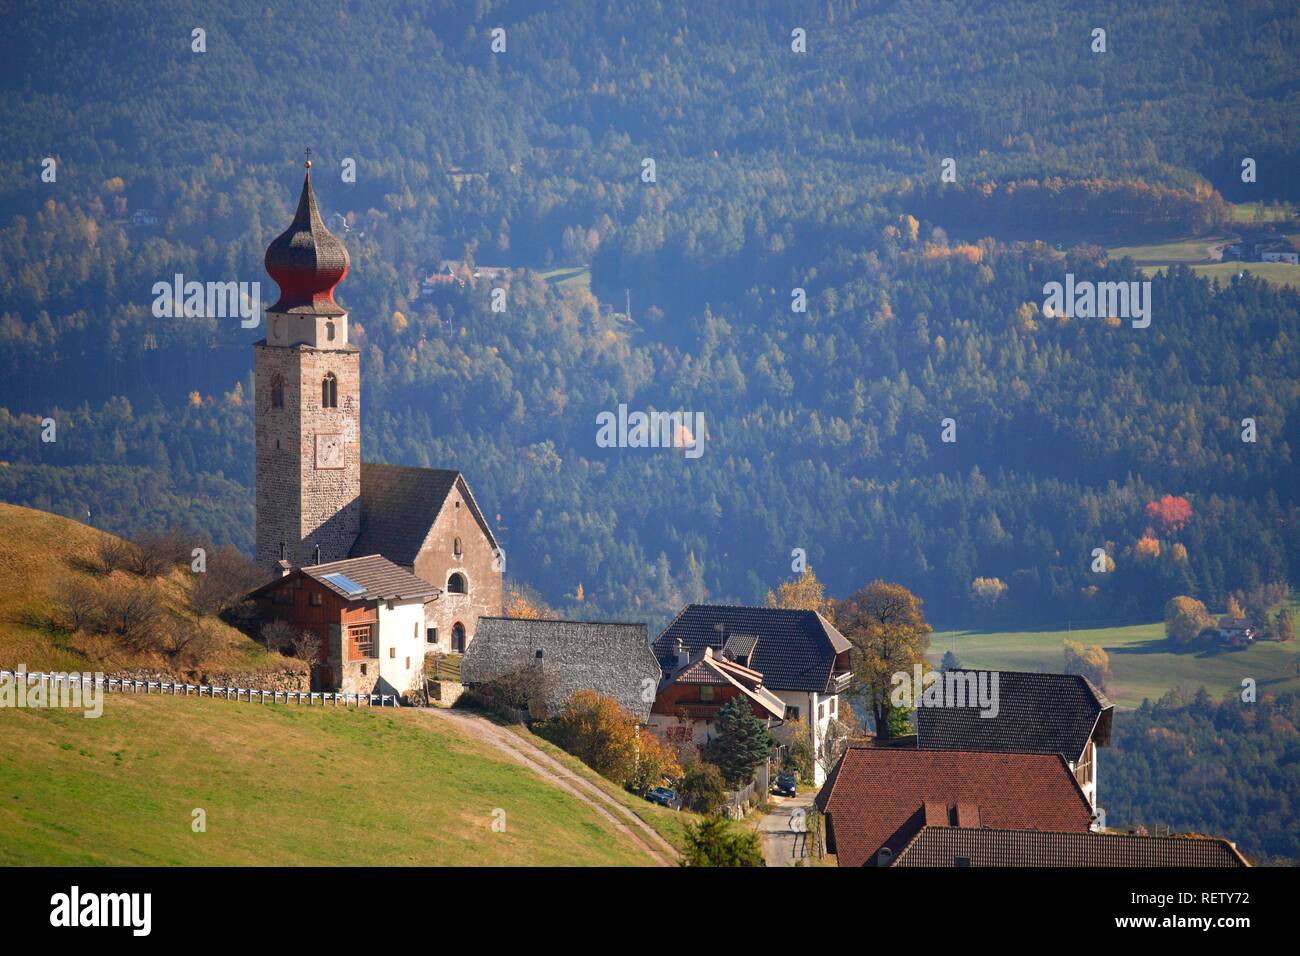 Saint Nicholas Church near Mittelberg, Ritten, South Tirol, Italy, Europe Stock Photo